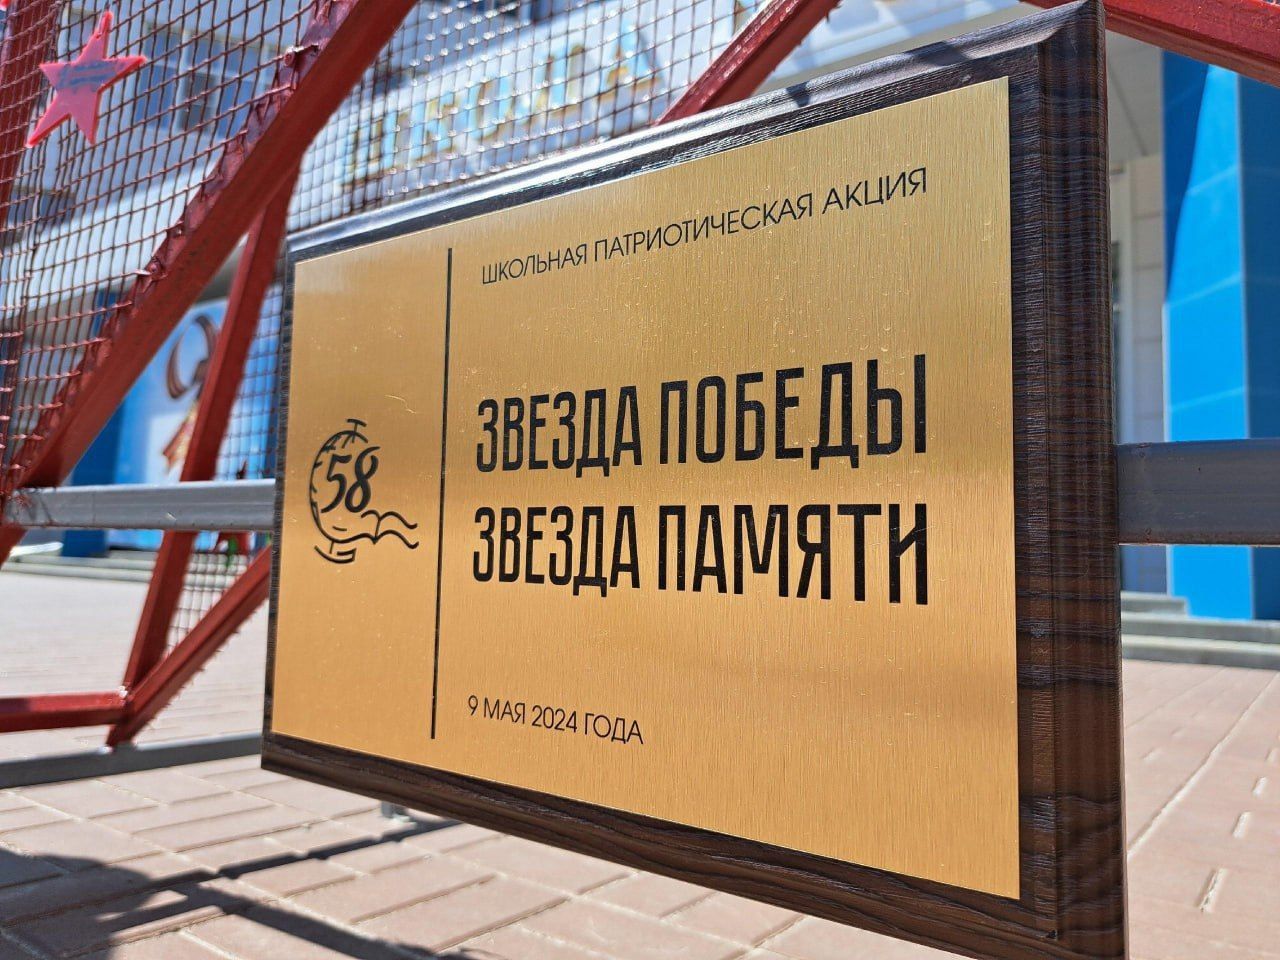 Во дворе школы № 58 установлена «Звезда Памяти».